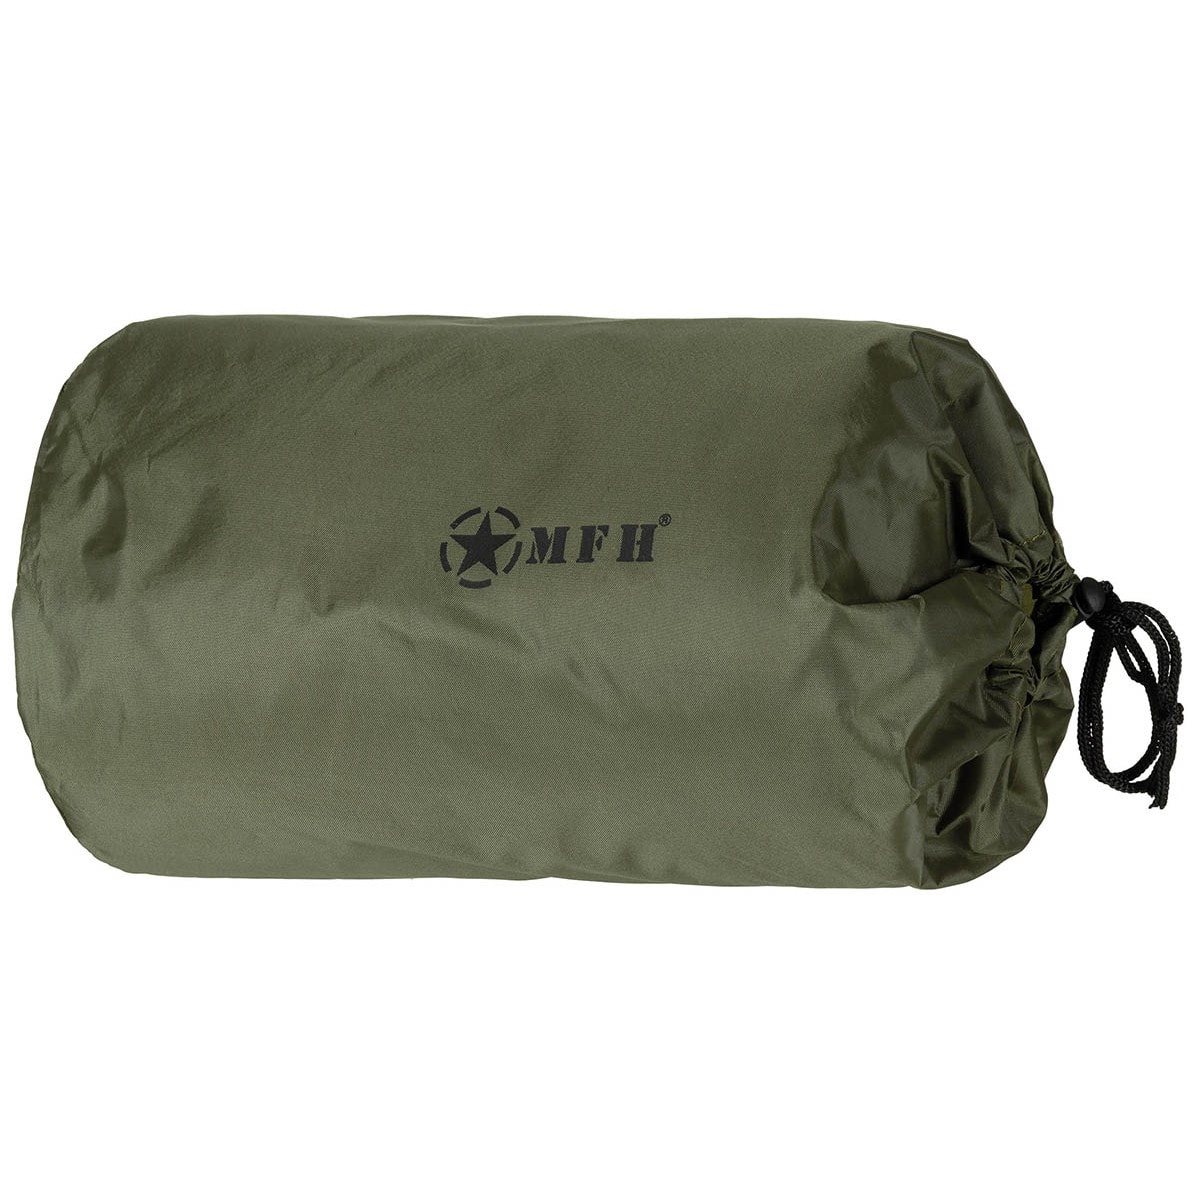 FLEECE blanket 200 x 150 cm M95 MFH int. comp. 32340J L-11